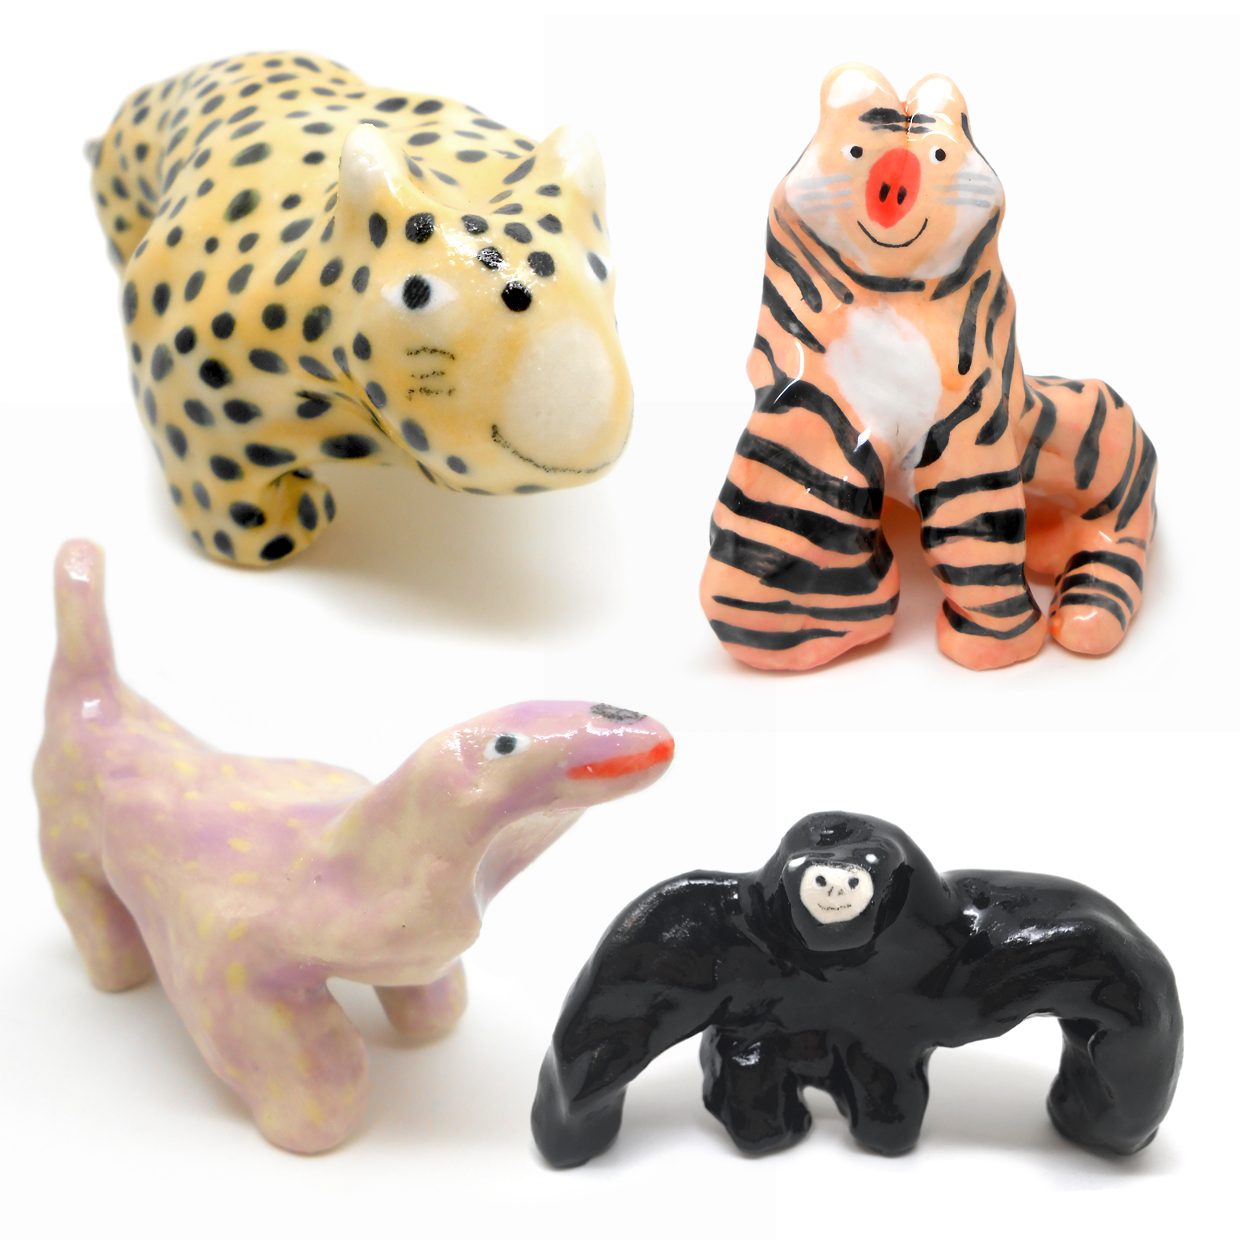 Ceramic animals by Min Pin